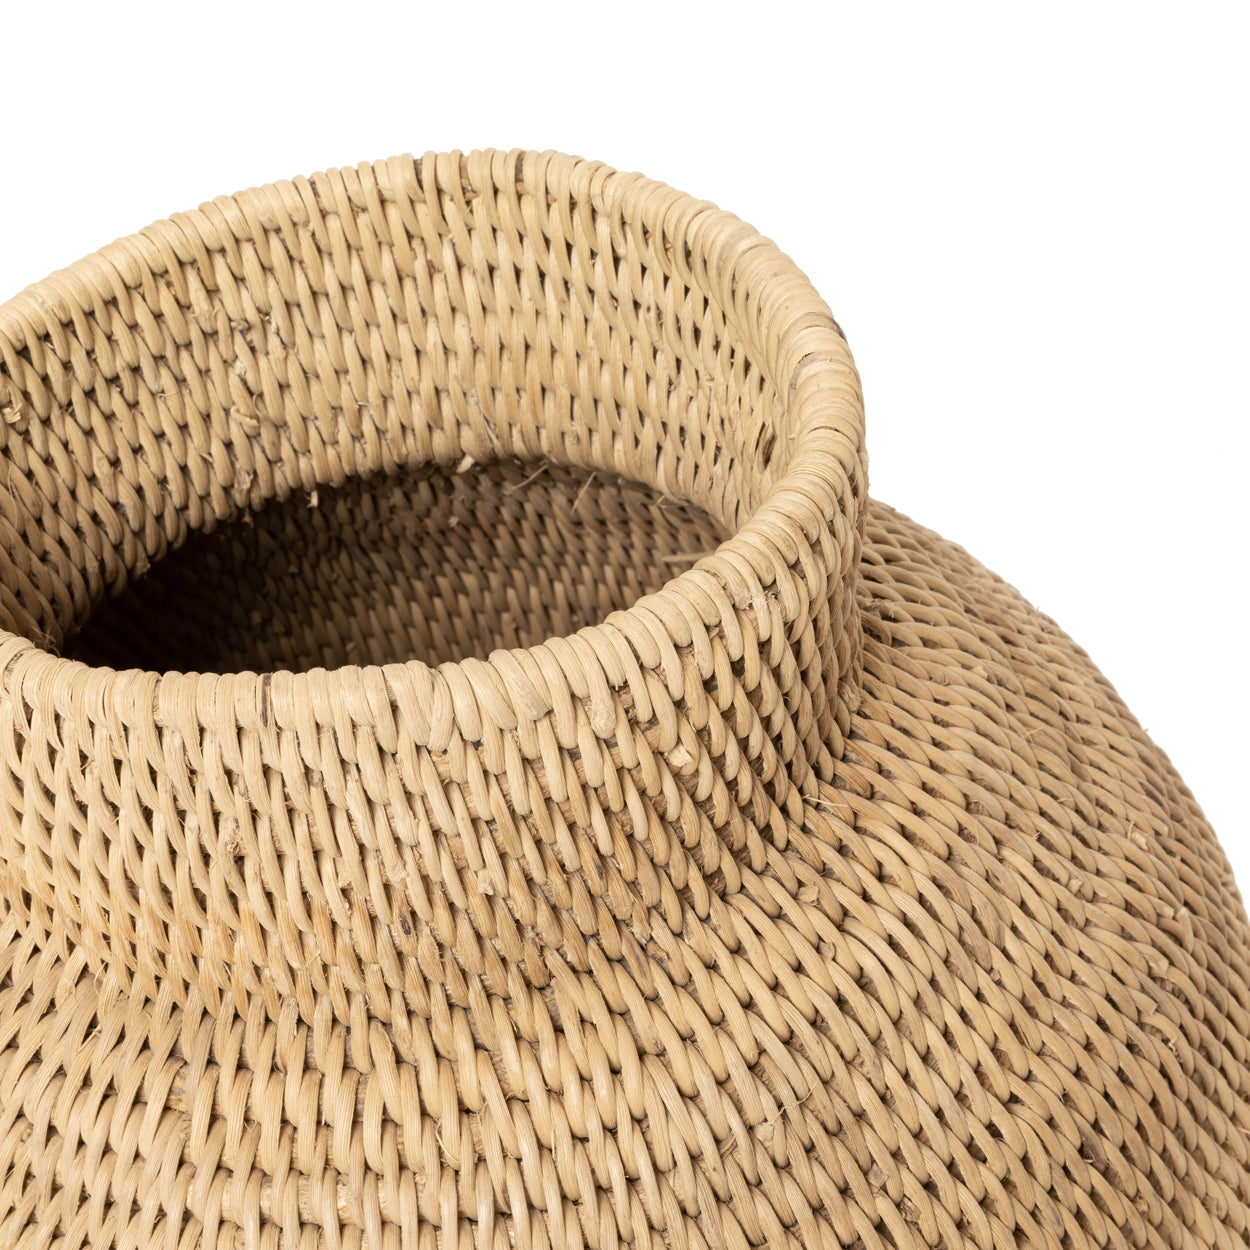 Buhera basket natural 35 cm